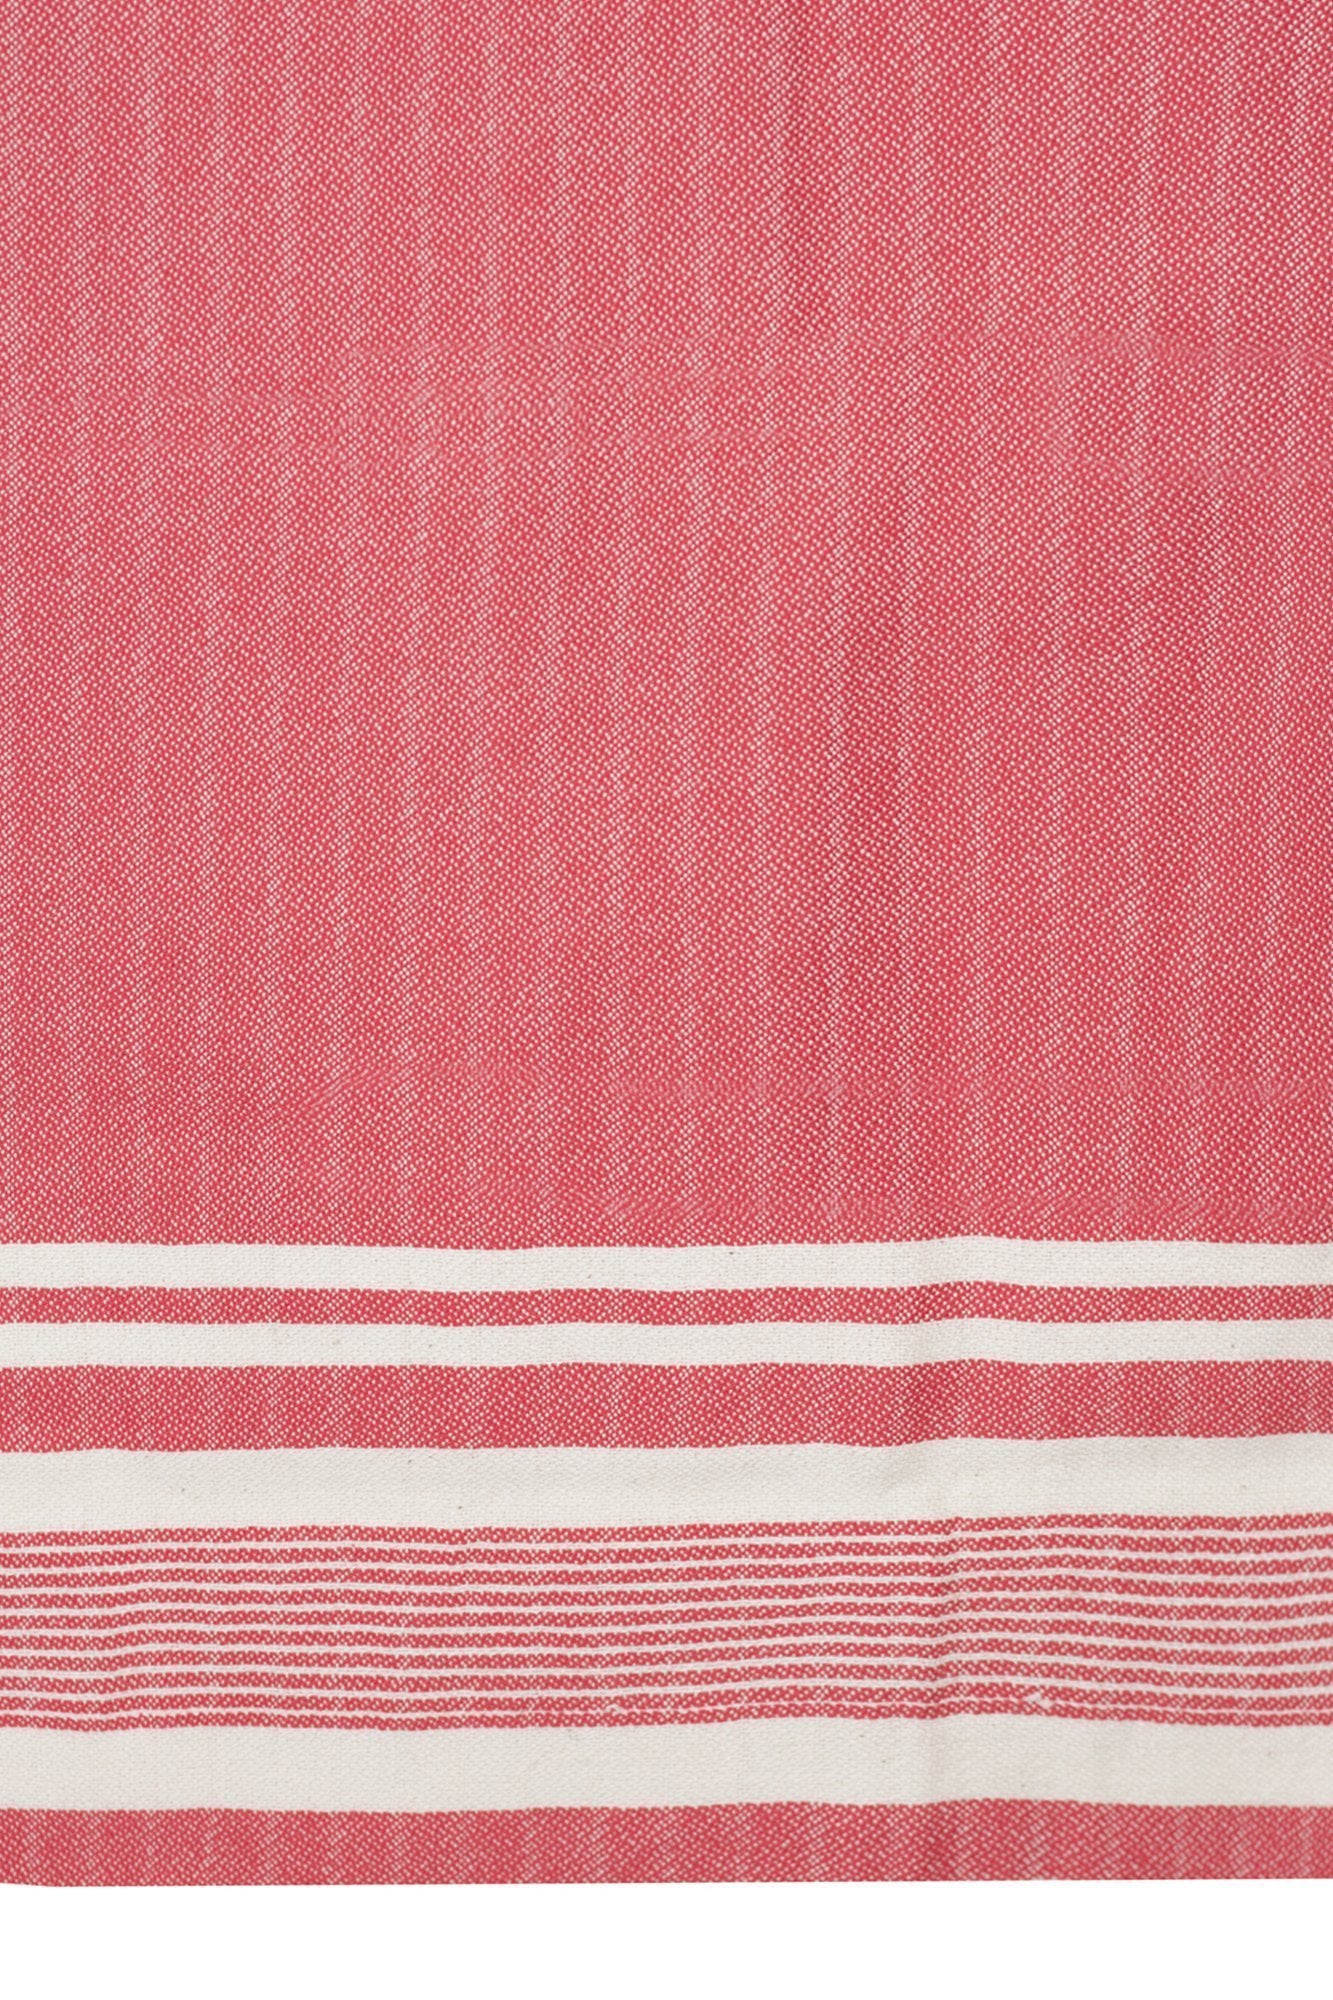 sultan red stripe peshtemal turkish towels chassca 